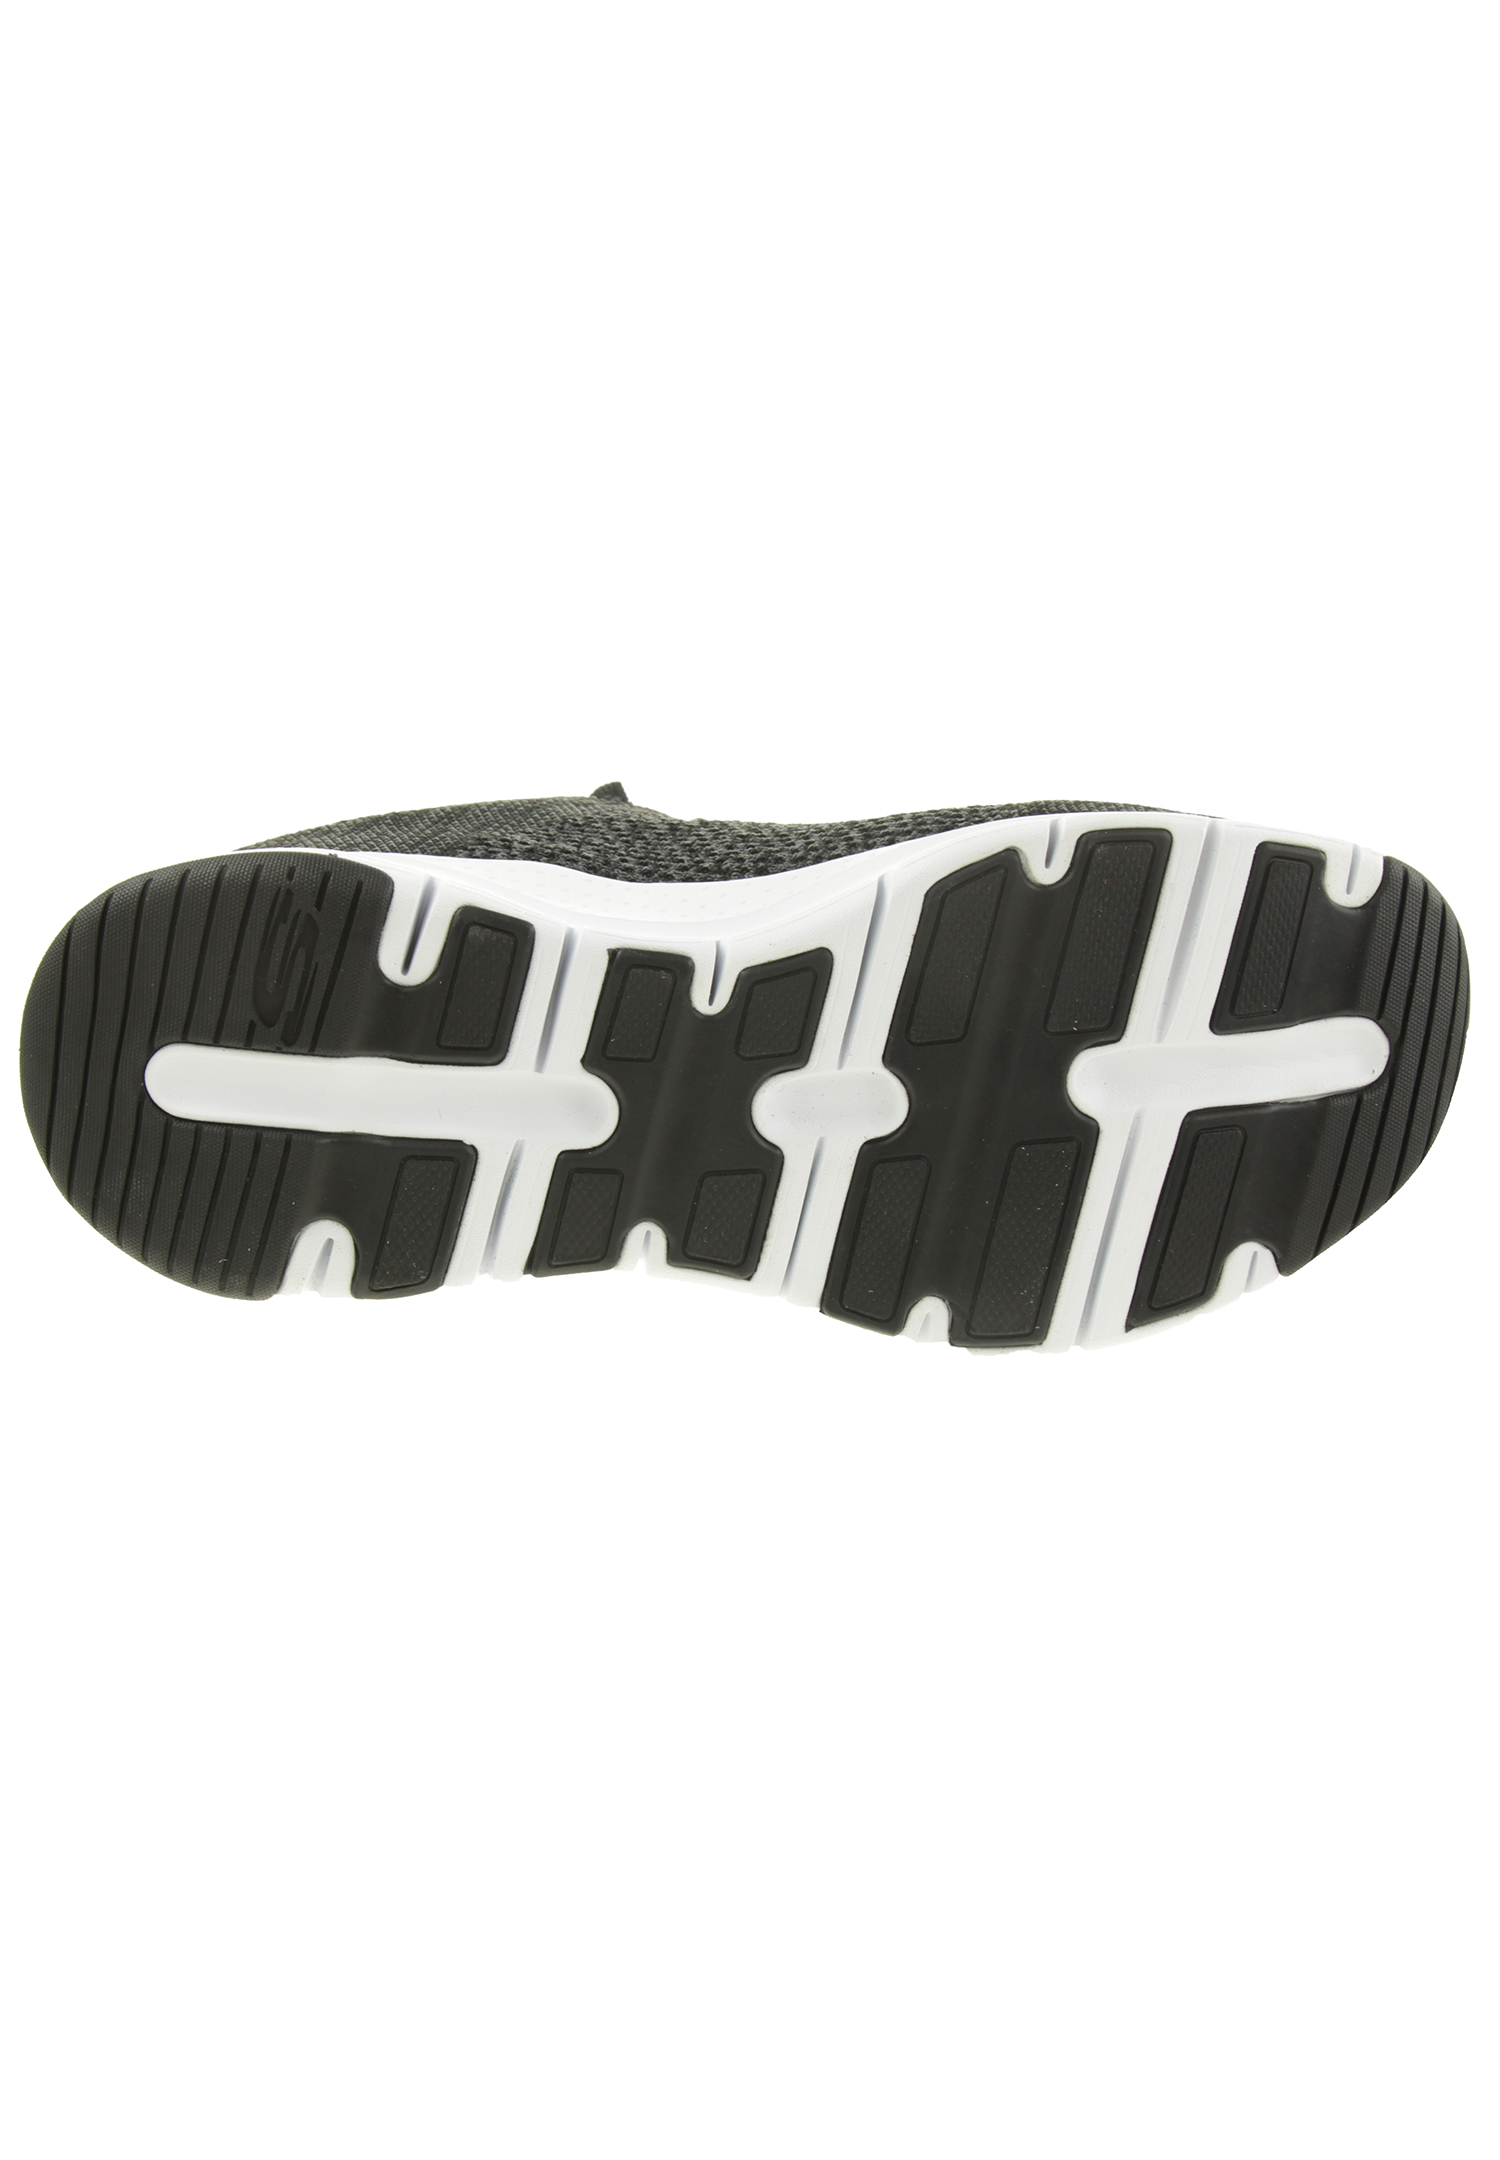 Skechers Arch-Fit PARADYME Herren Sneaker 232041 BKW schwarz/weiß